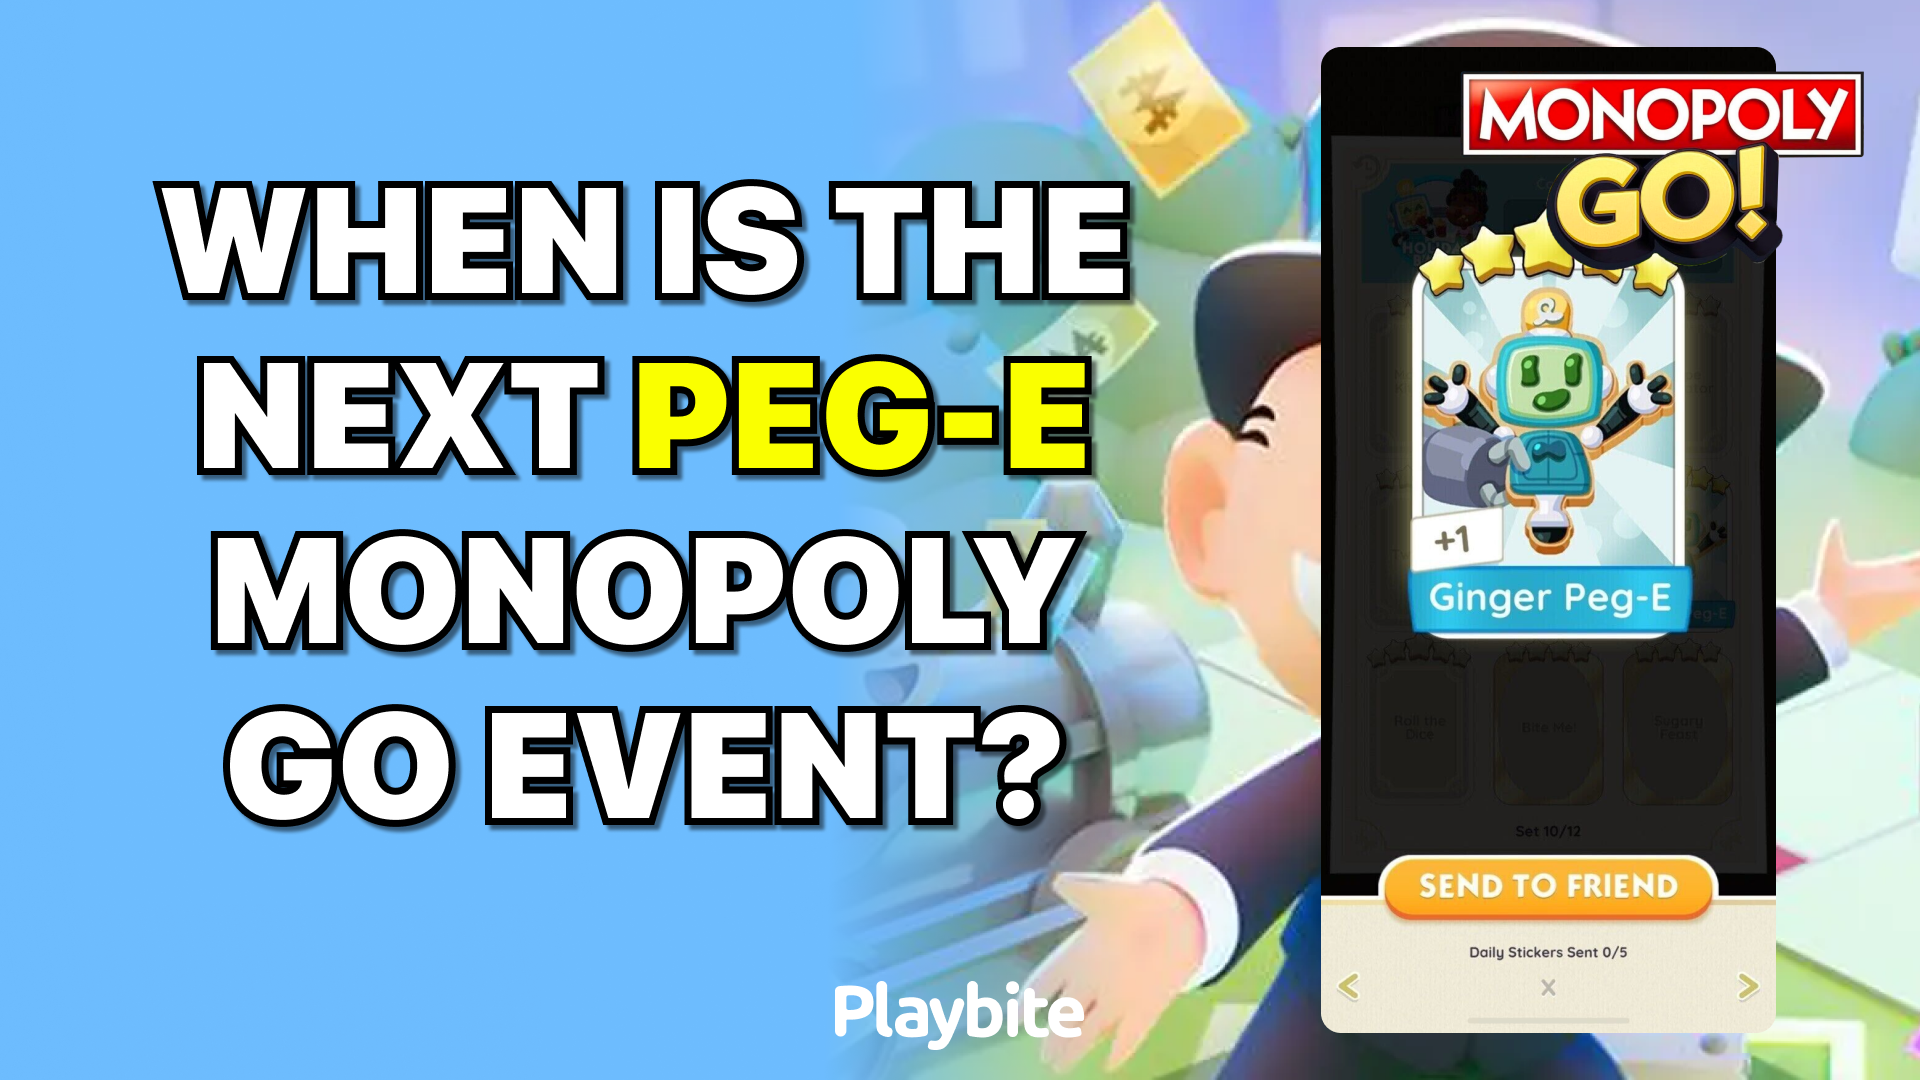 When Is the Next PEG E Monopoly Go Event?